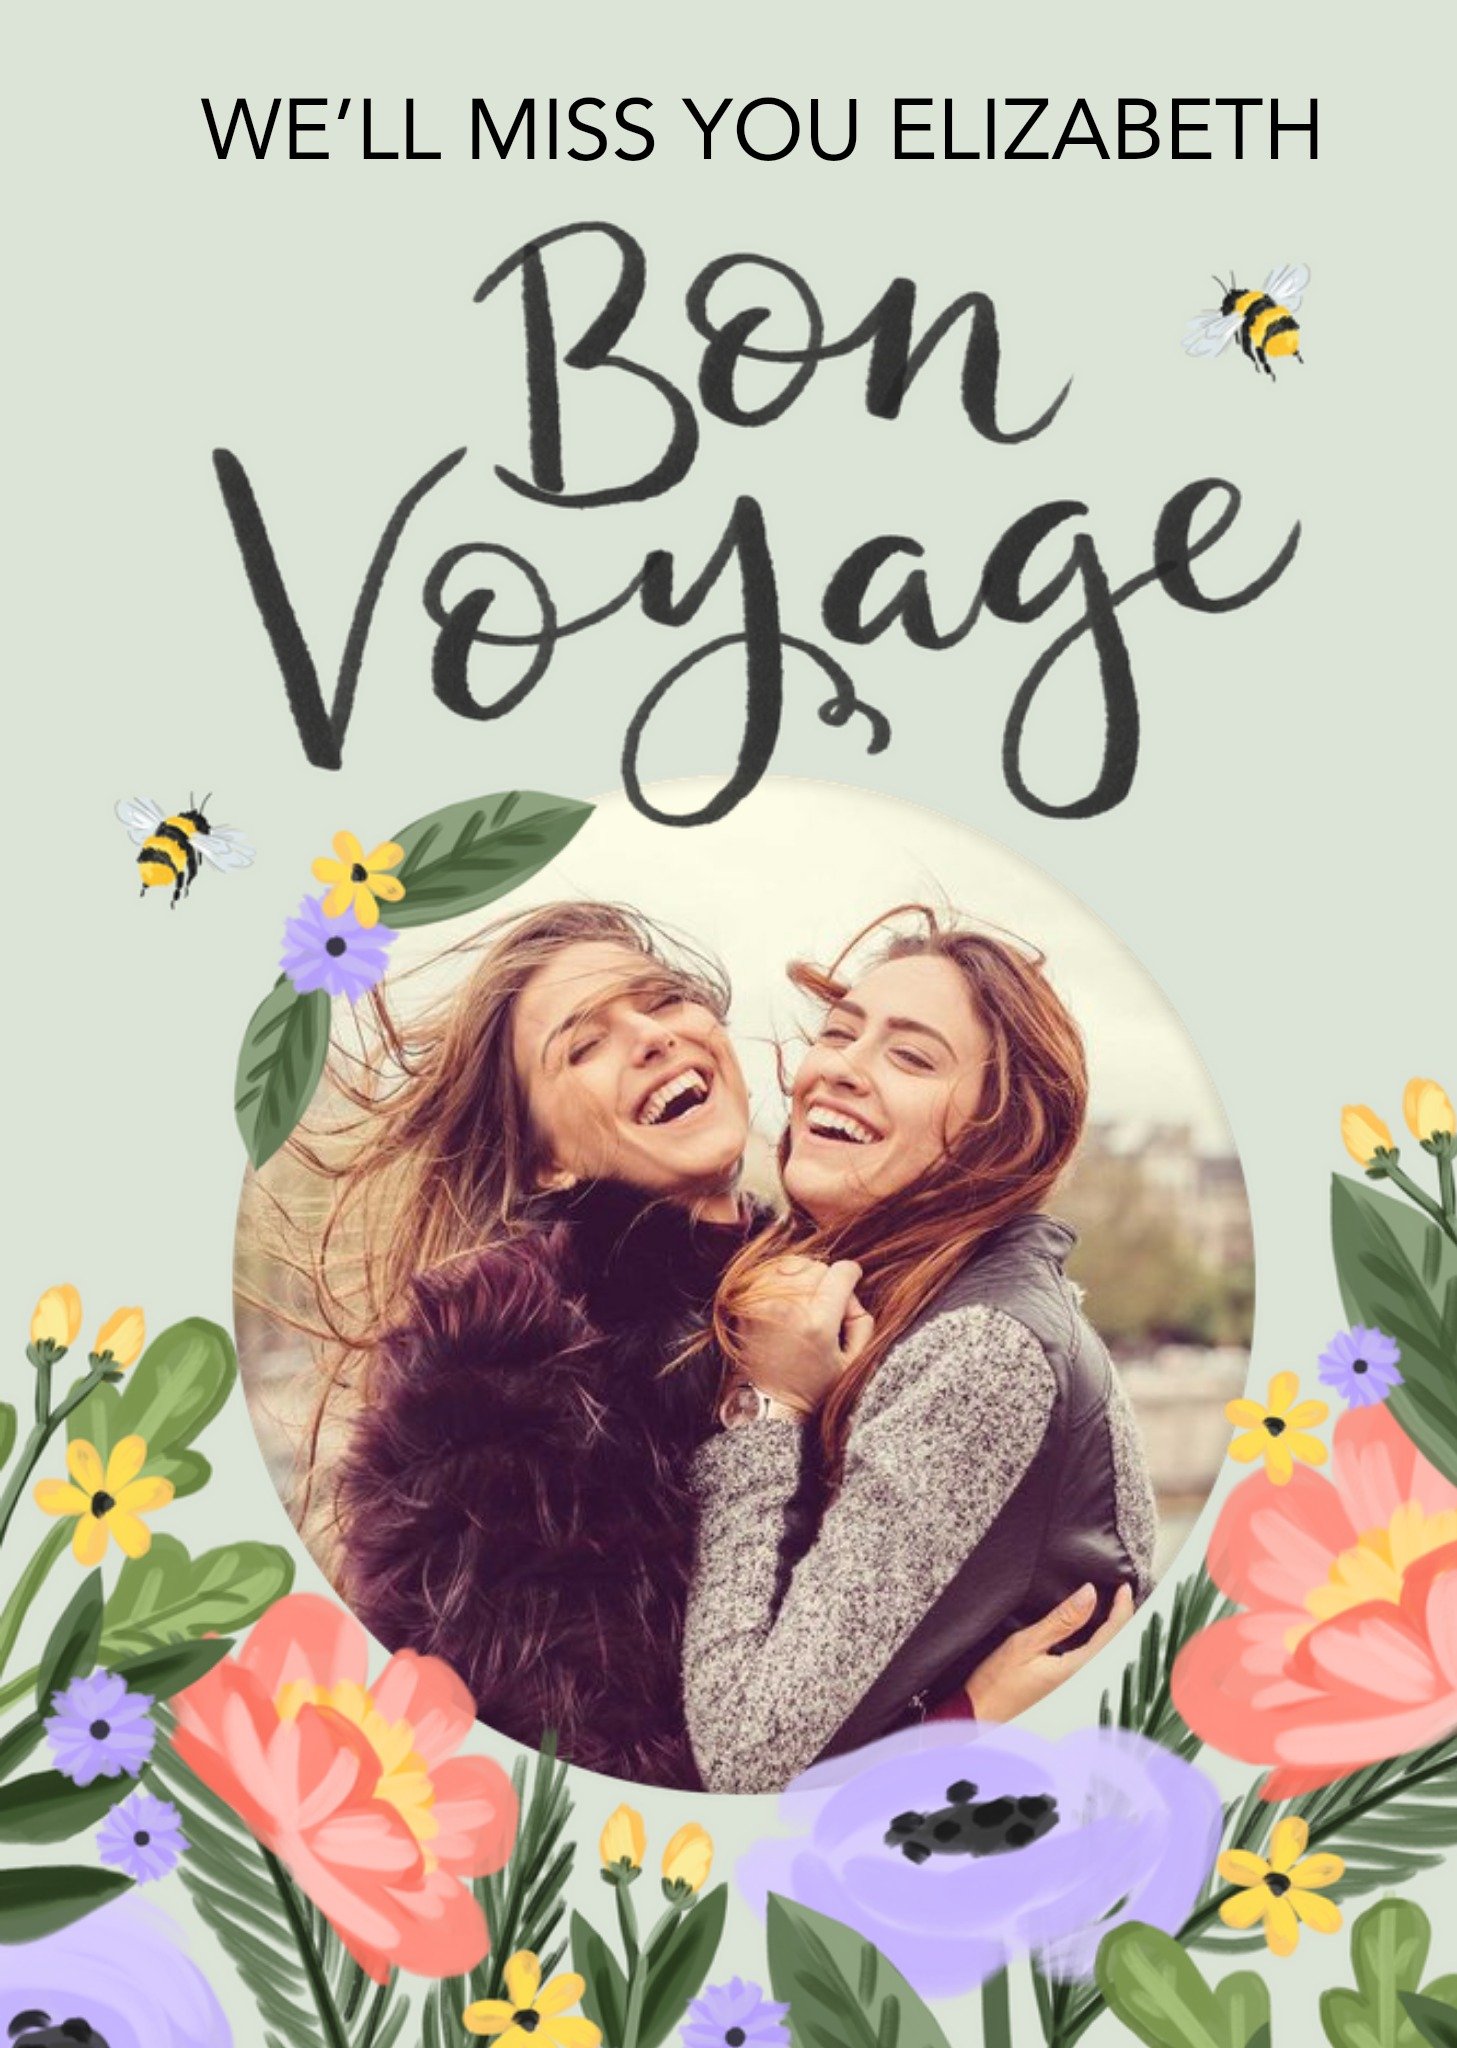 Friends Illustration Of Flowers Surround A Circular Photo Frame Bon Voyage Photo Upload Card, Large